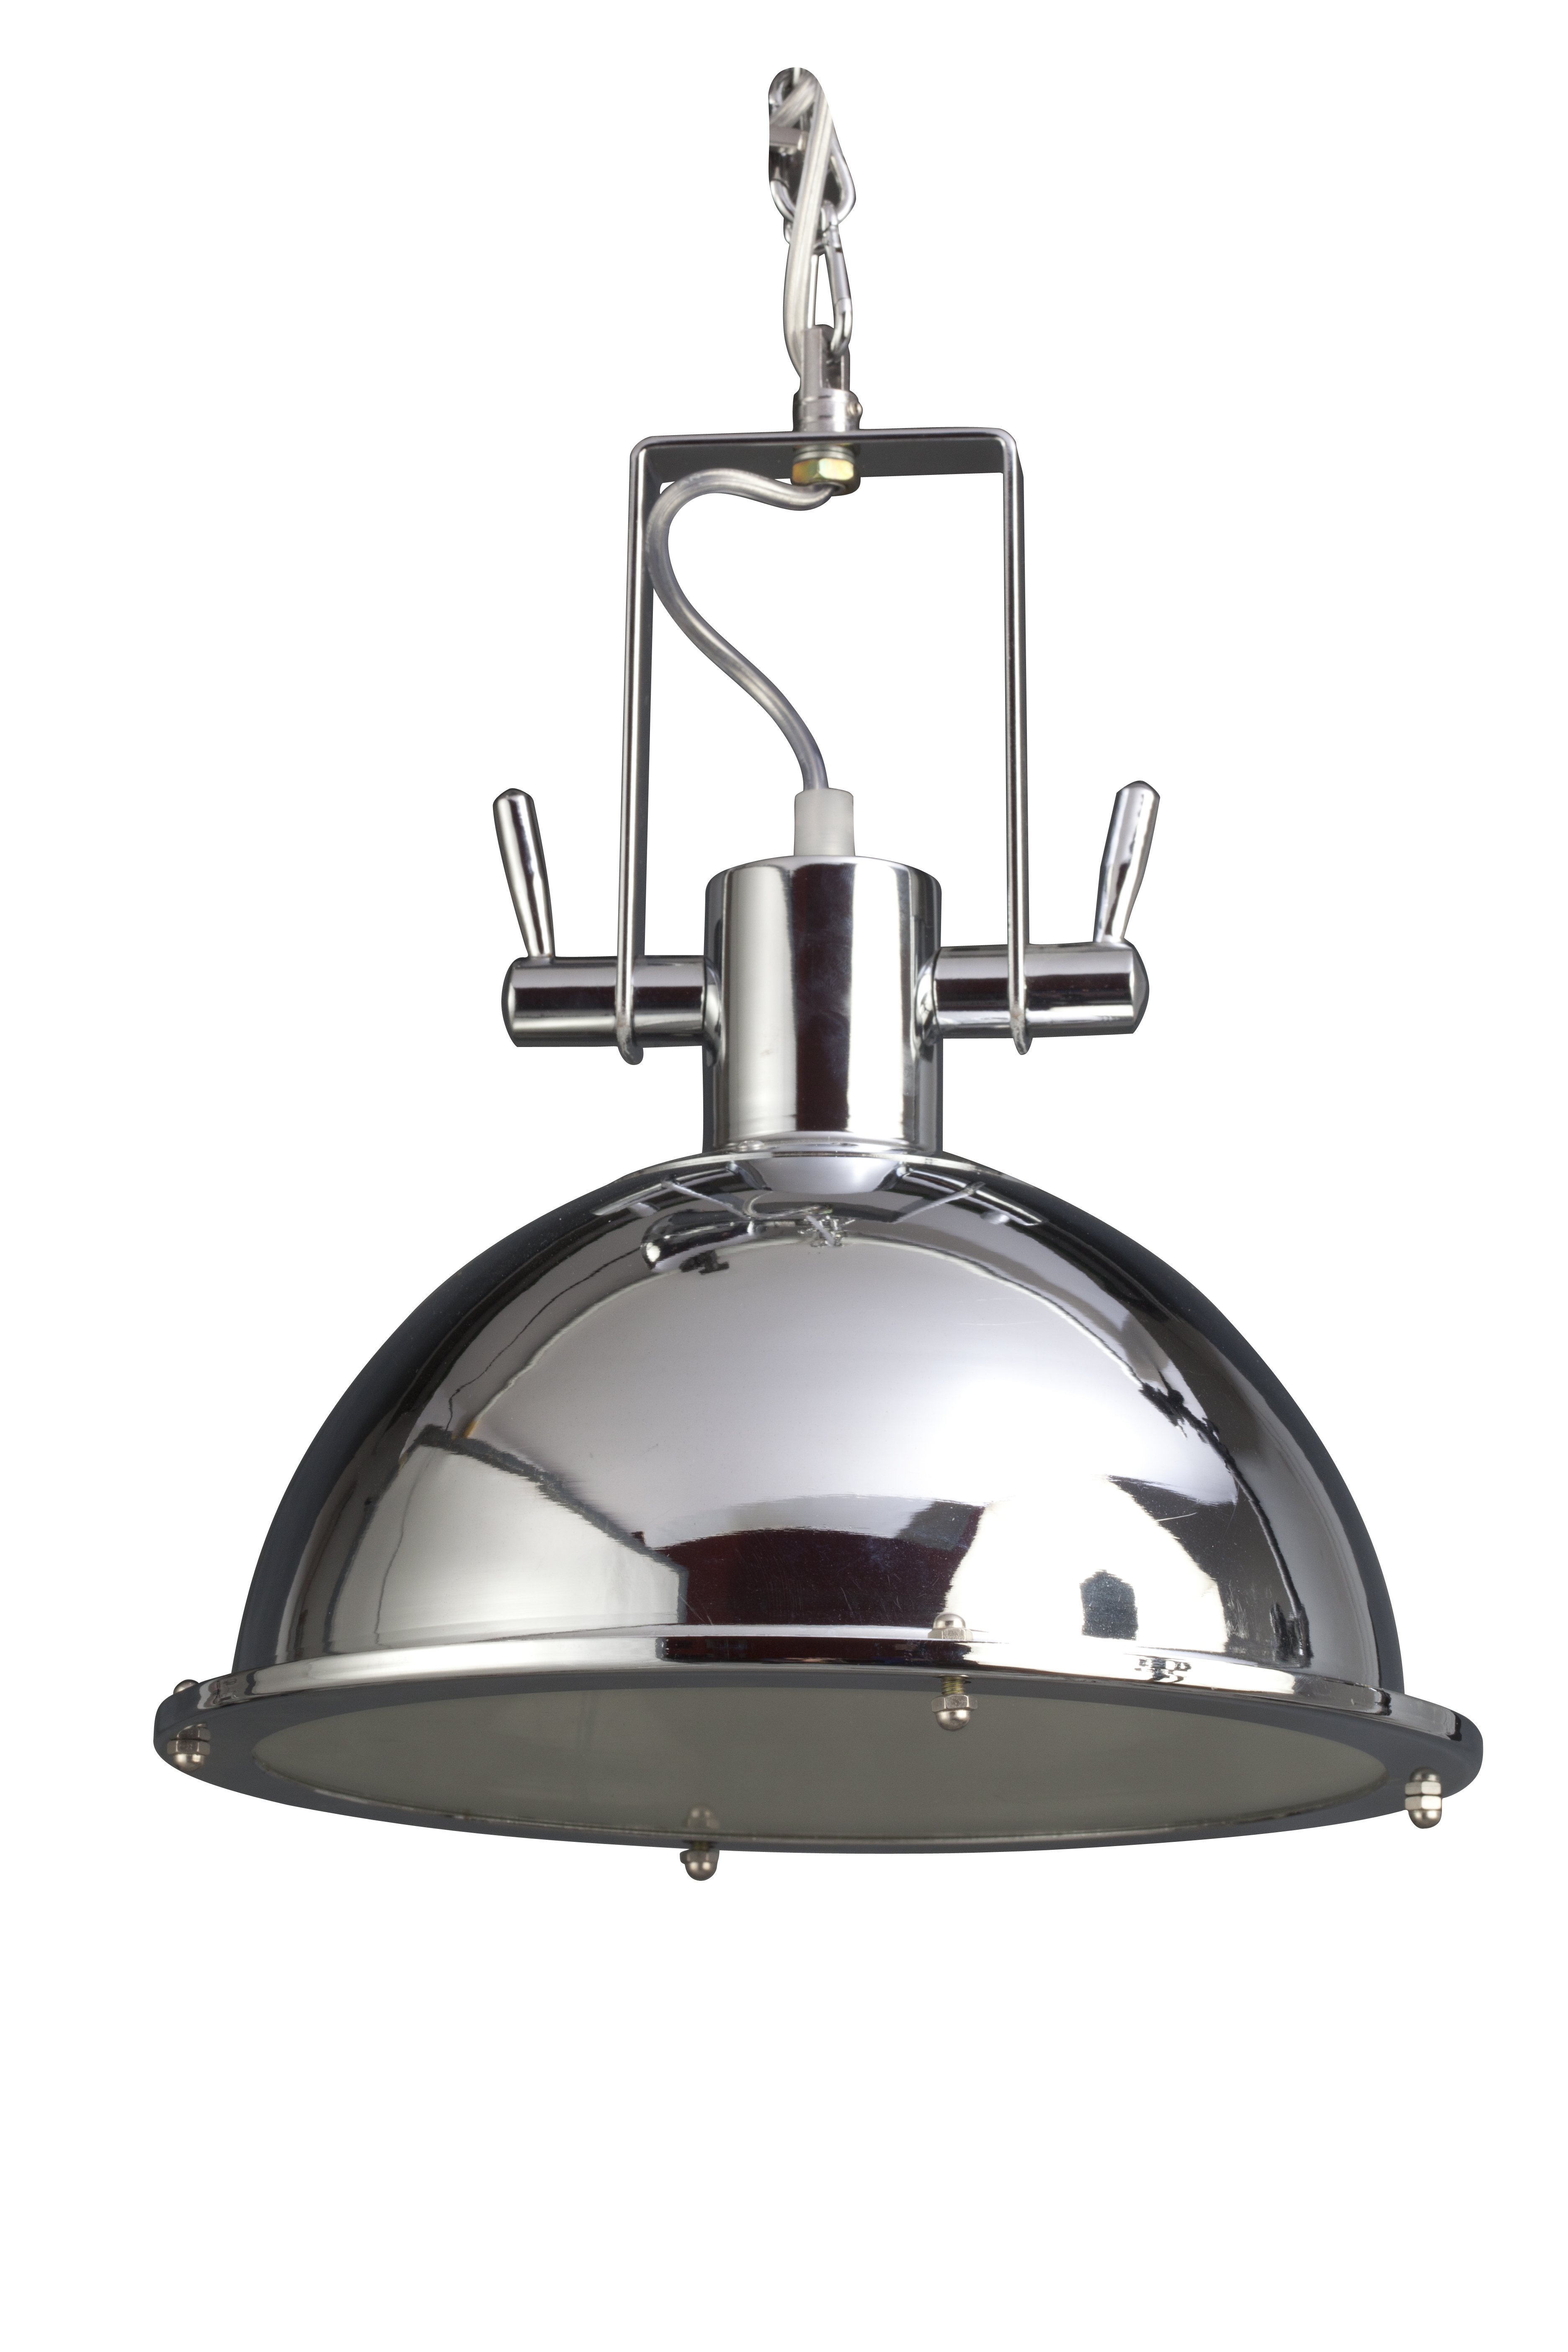 Chrome practical decorative industrial pendant lamp (C710 chrome)